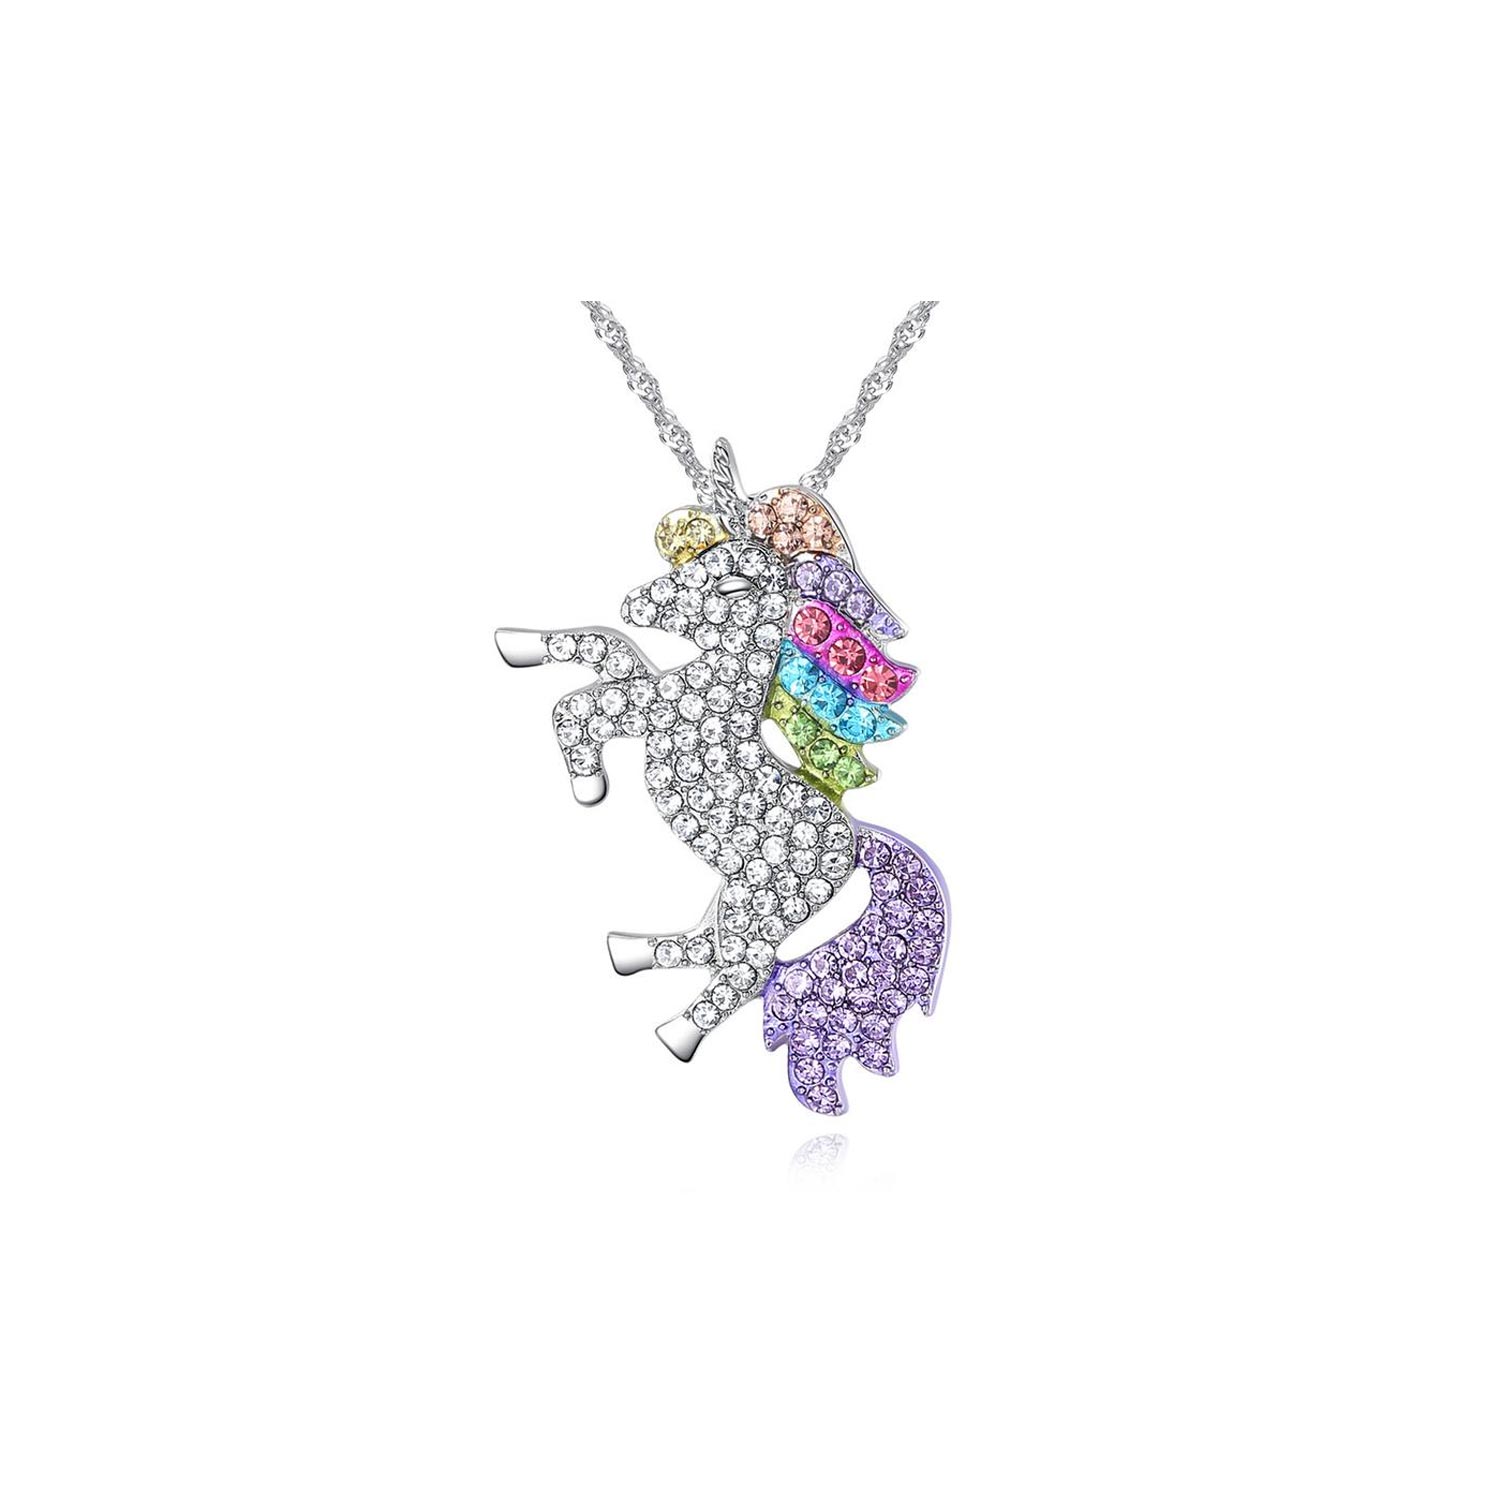 Multi-Colored Unicorn Pendant Necklace Made With Swarovski Crystals